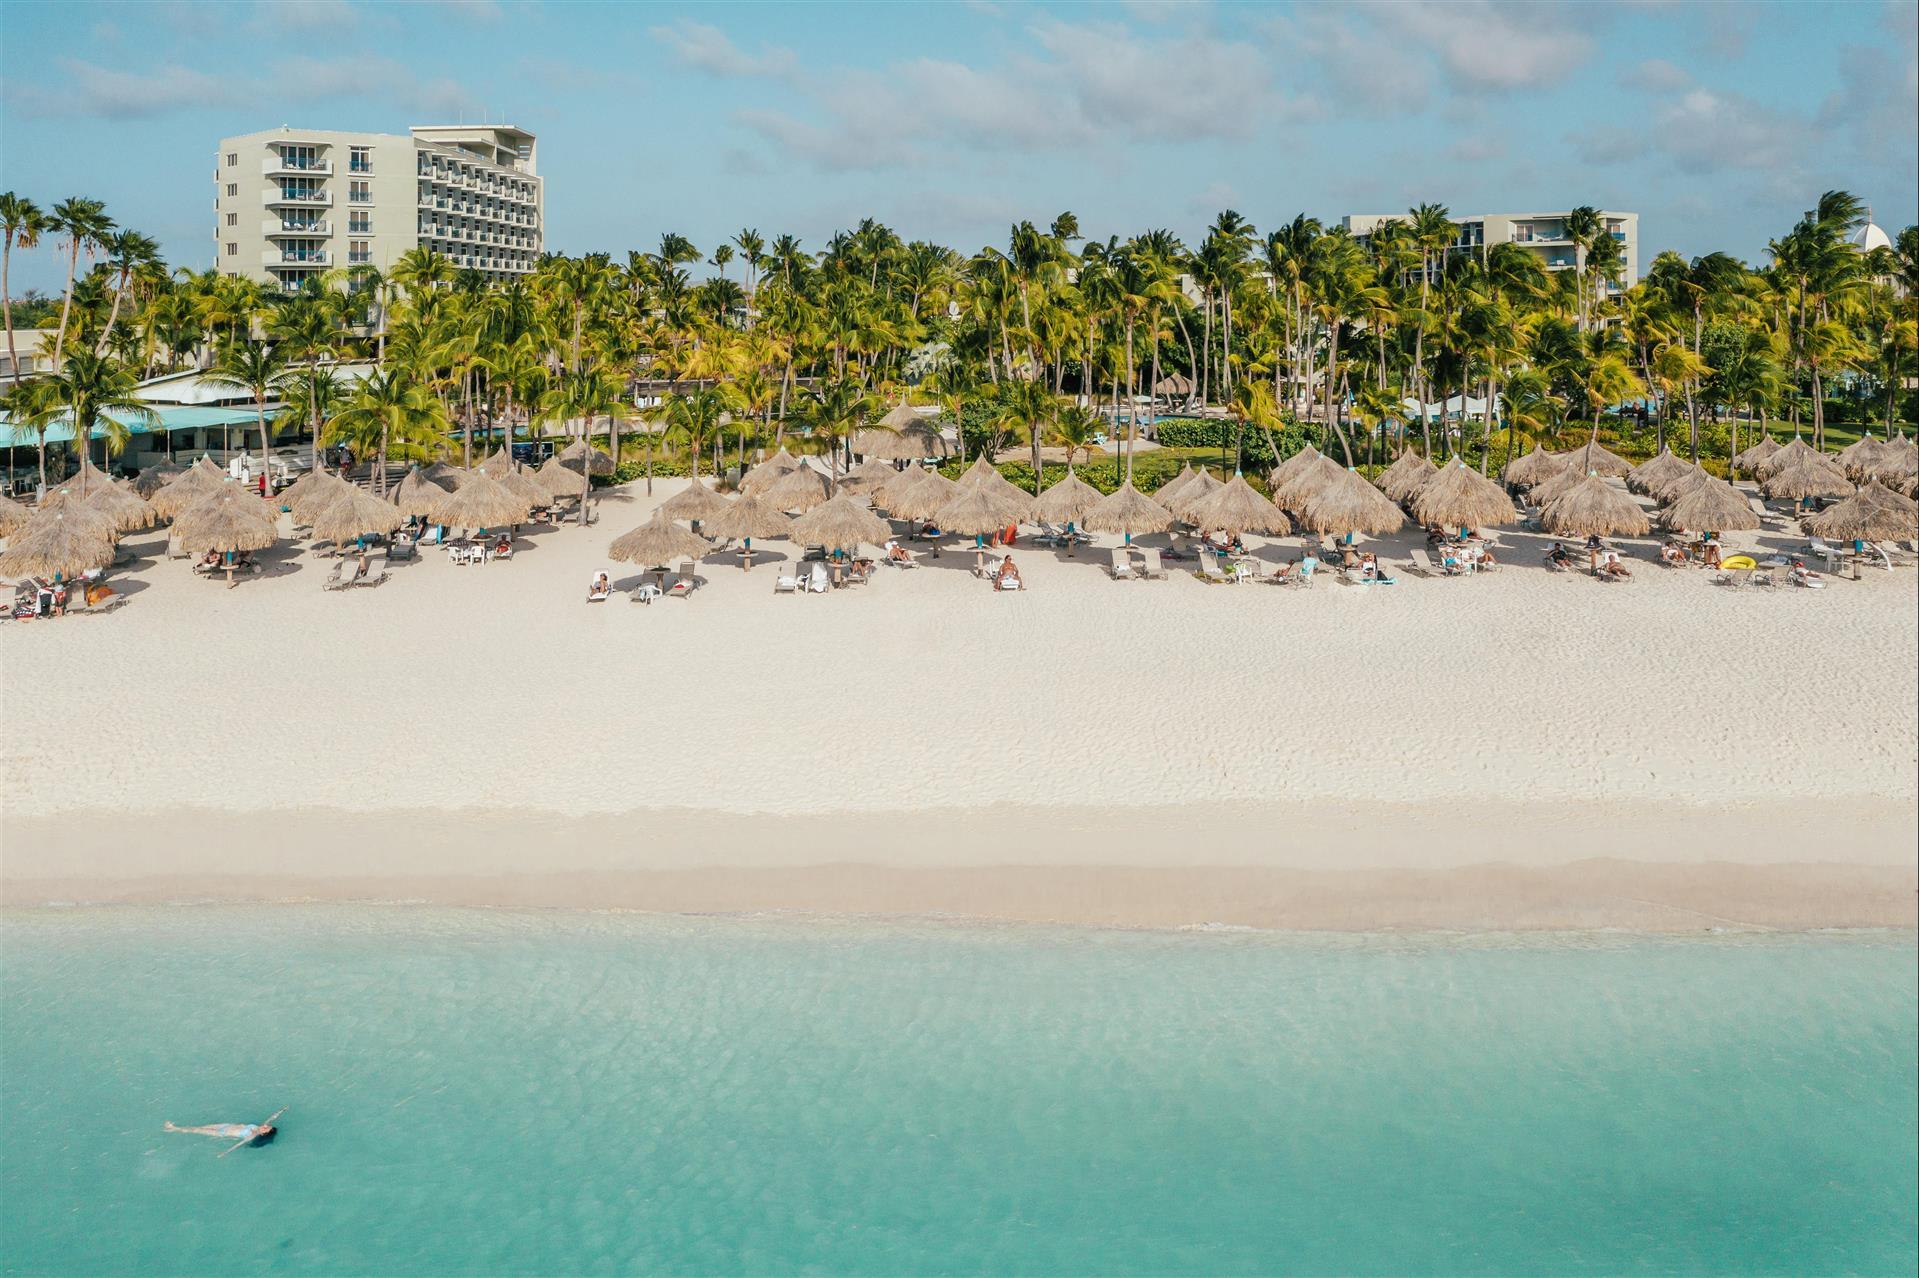 Hilton Aruba Caribbean Resort & Casino in Palm Beach, AW